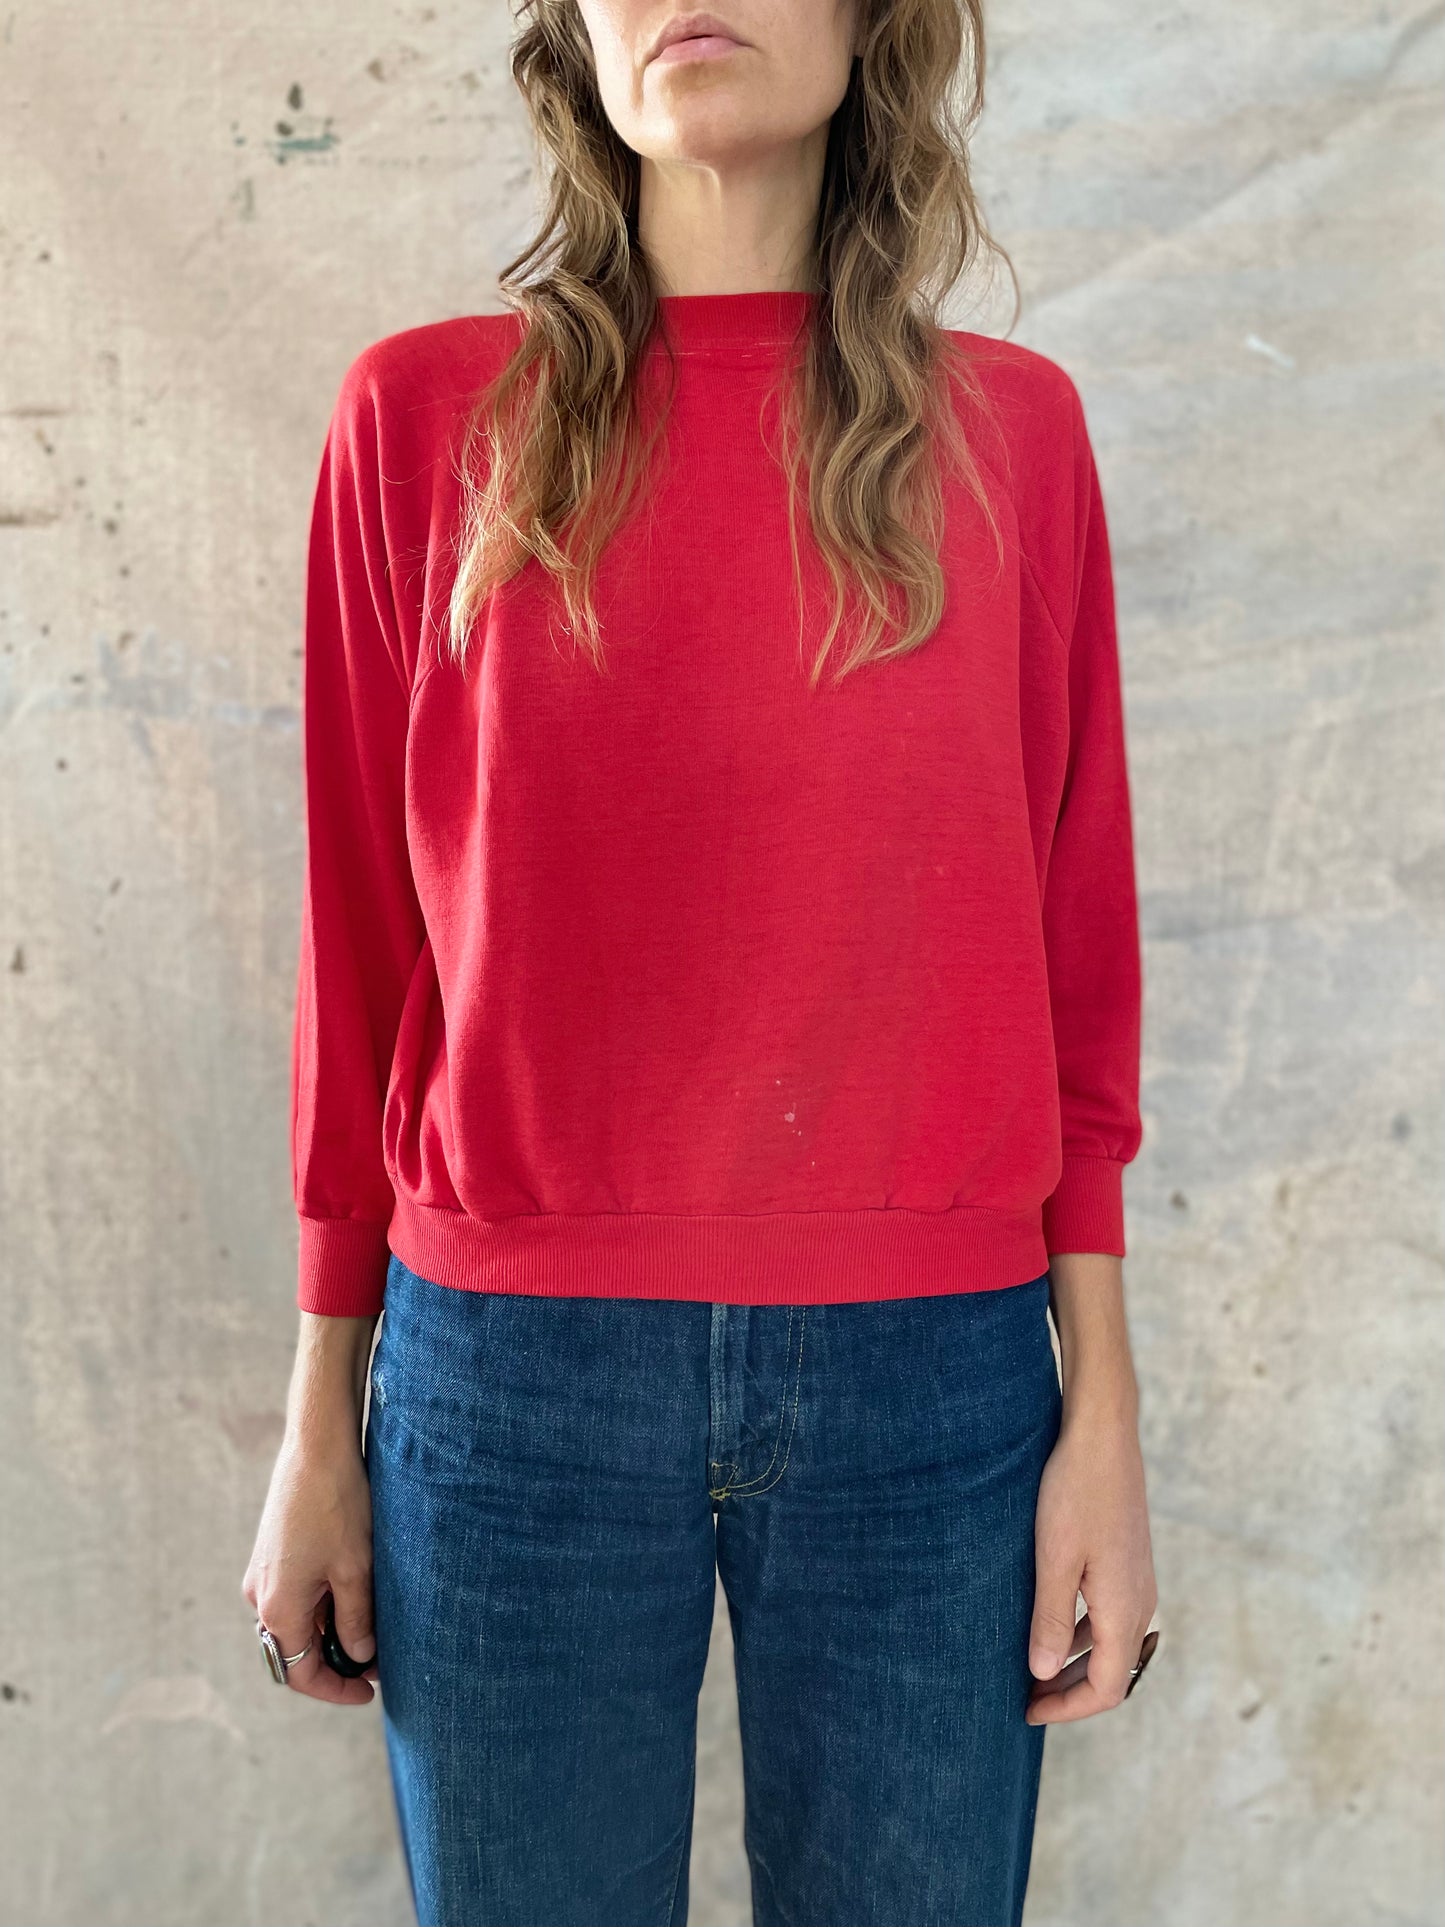 70s/80s Blank Red Sweatshirt